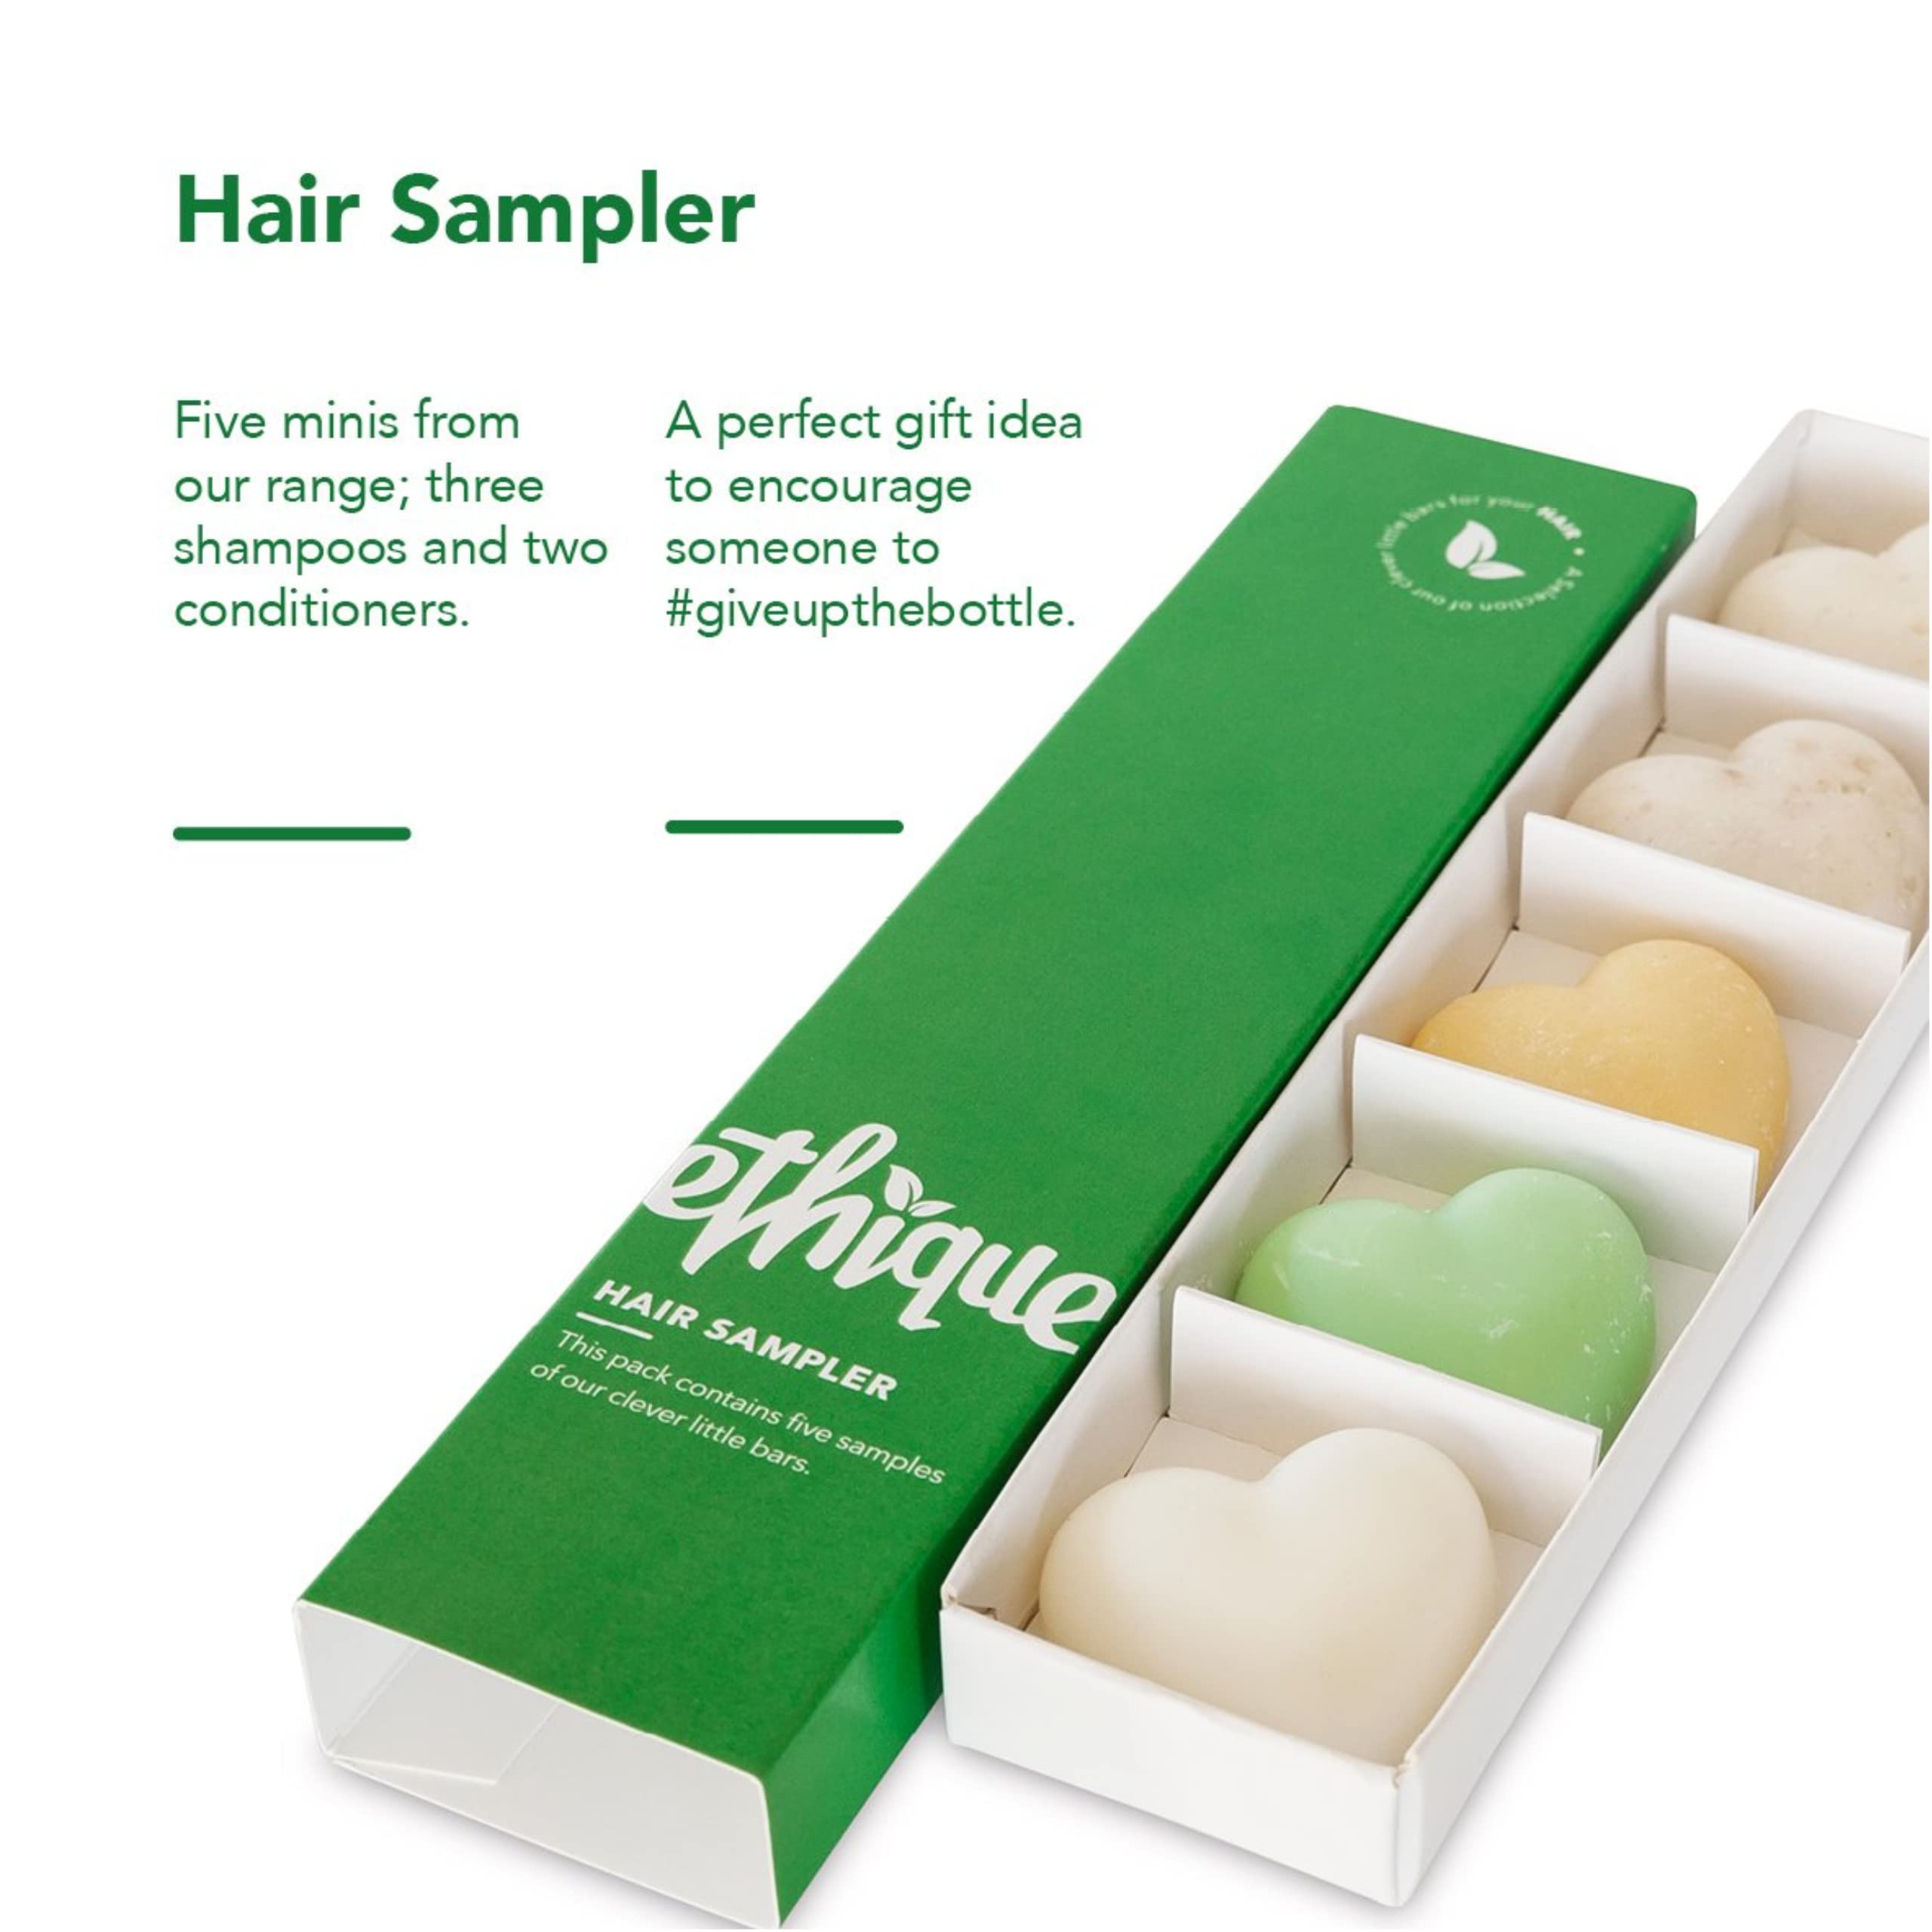 Ethique Hair Sampler - Shampoo & Conditioner - Plastic-Free, Vegan, Cruelty-Free, Eco-Friendly, 5 Travel Bars (Pack of 1)